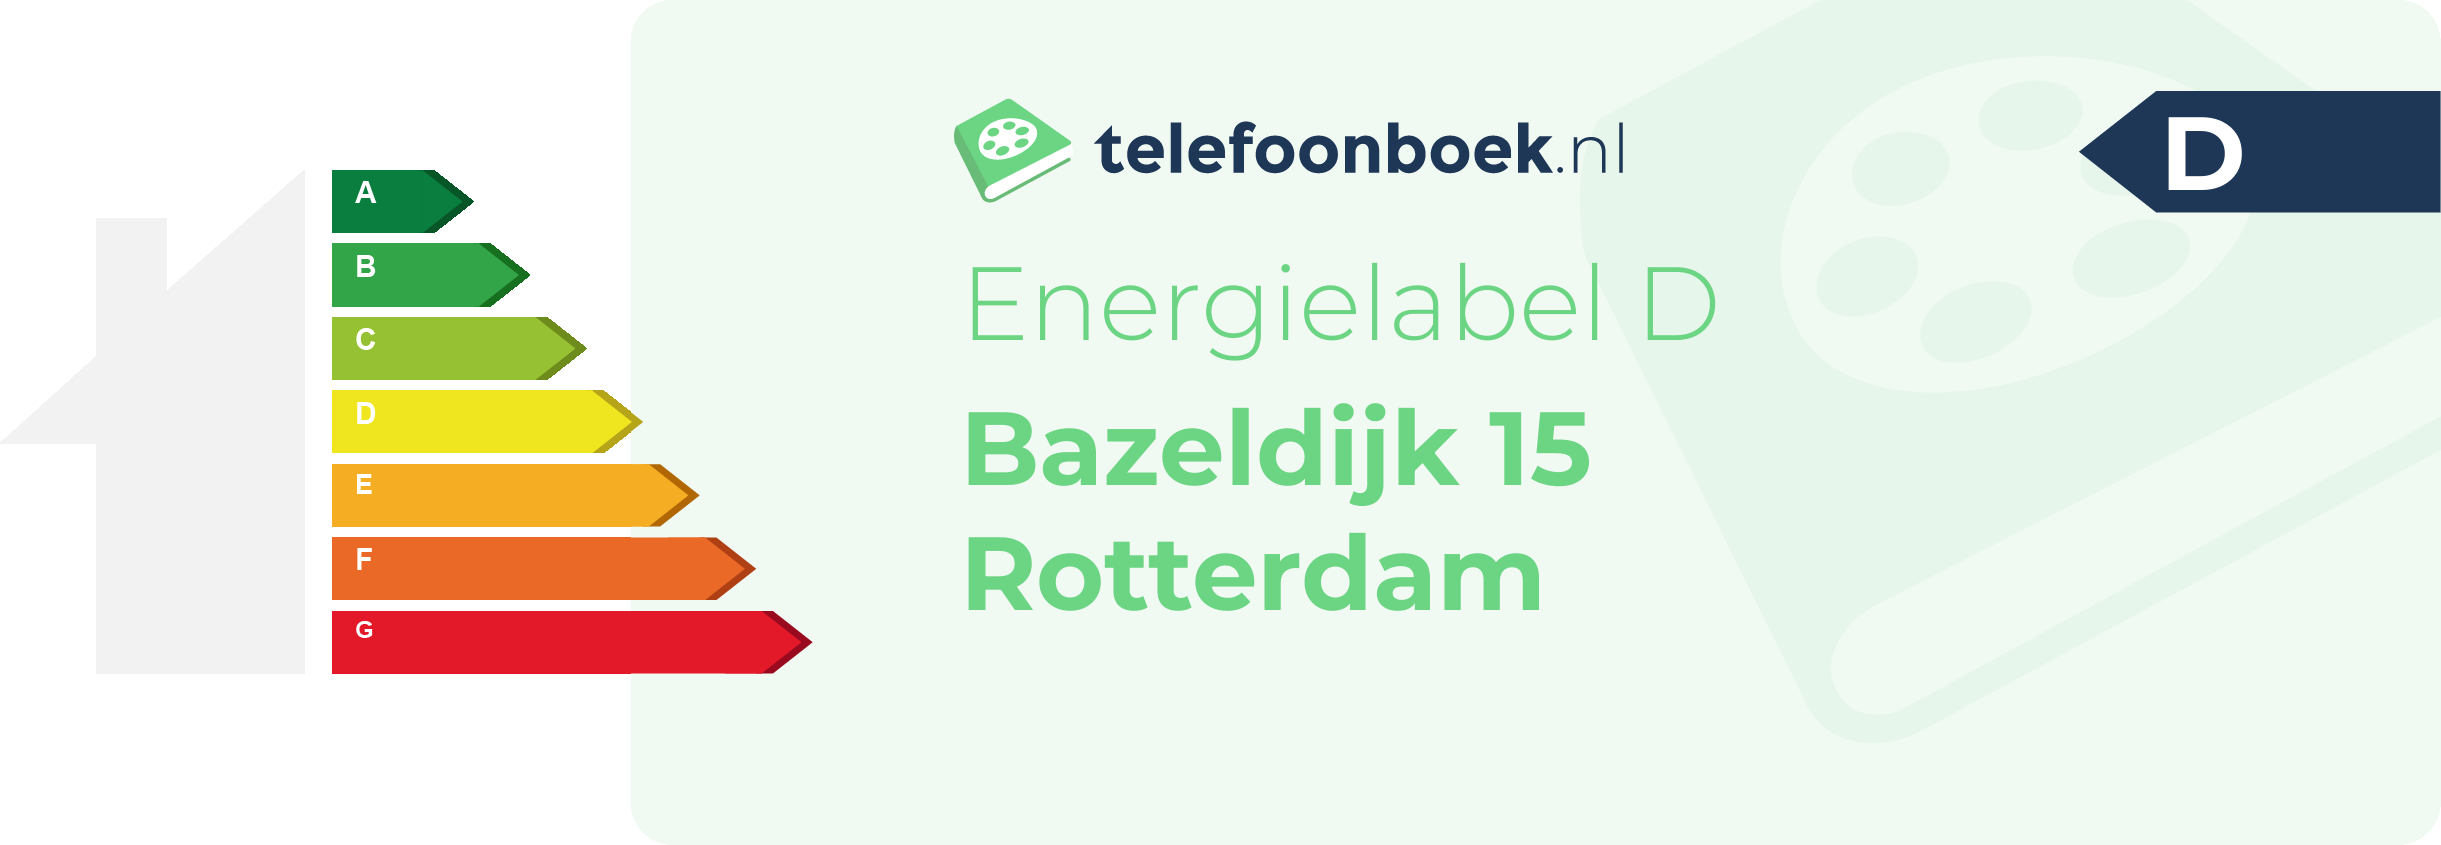 Energielabel Bazeldijk 15 Rotterdam